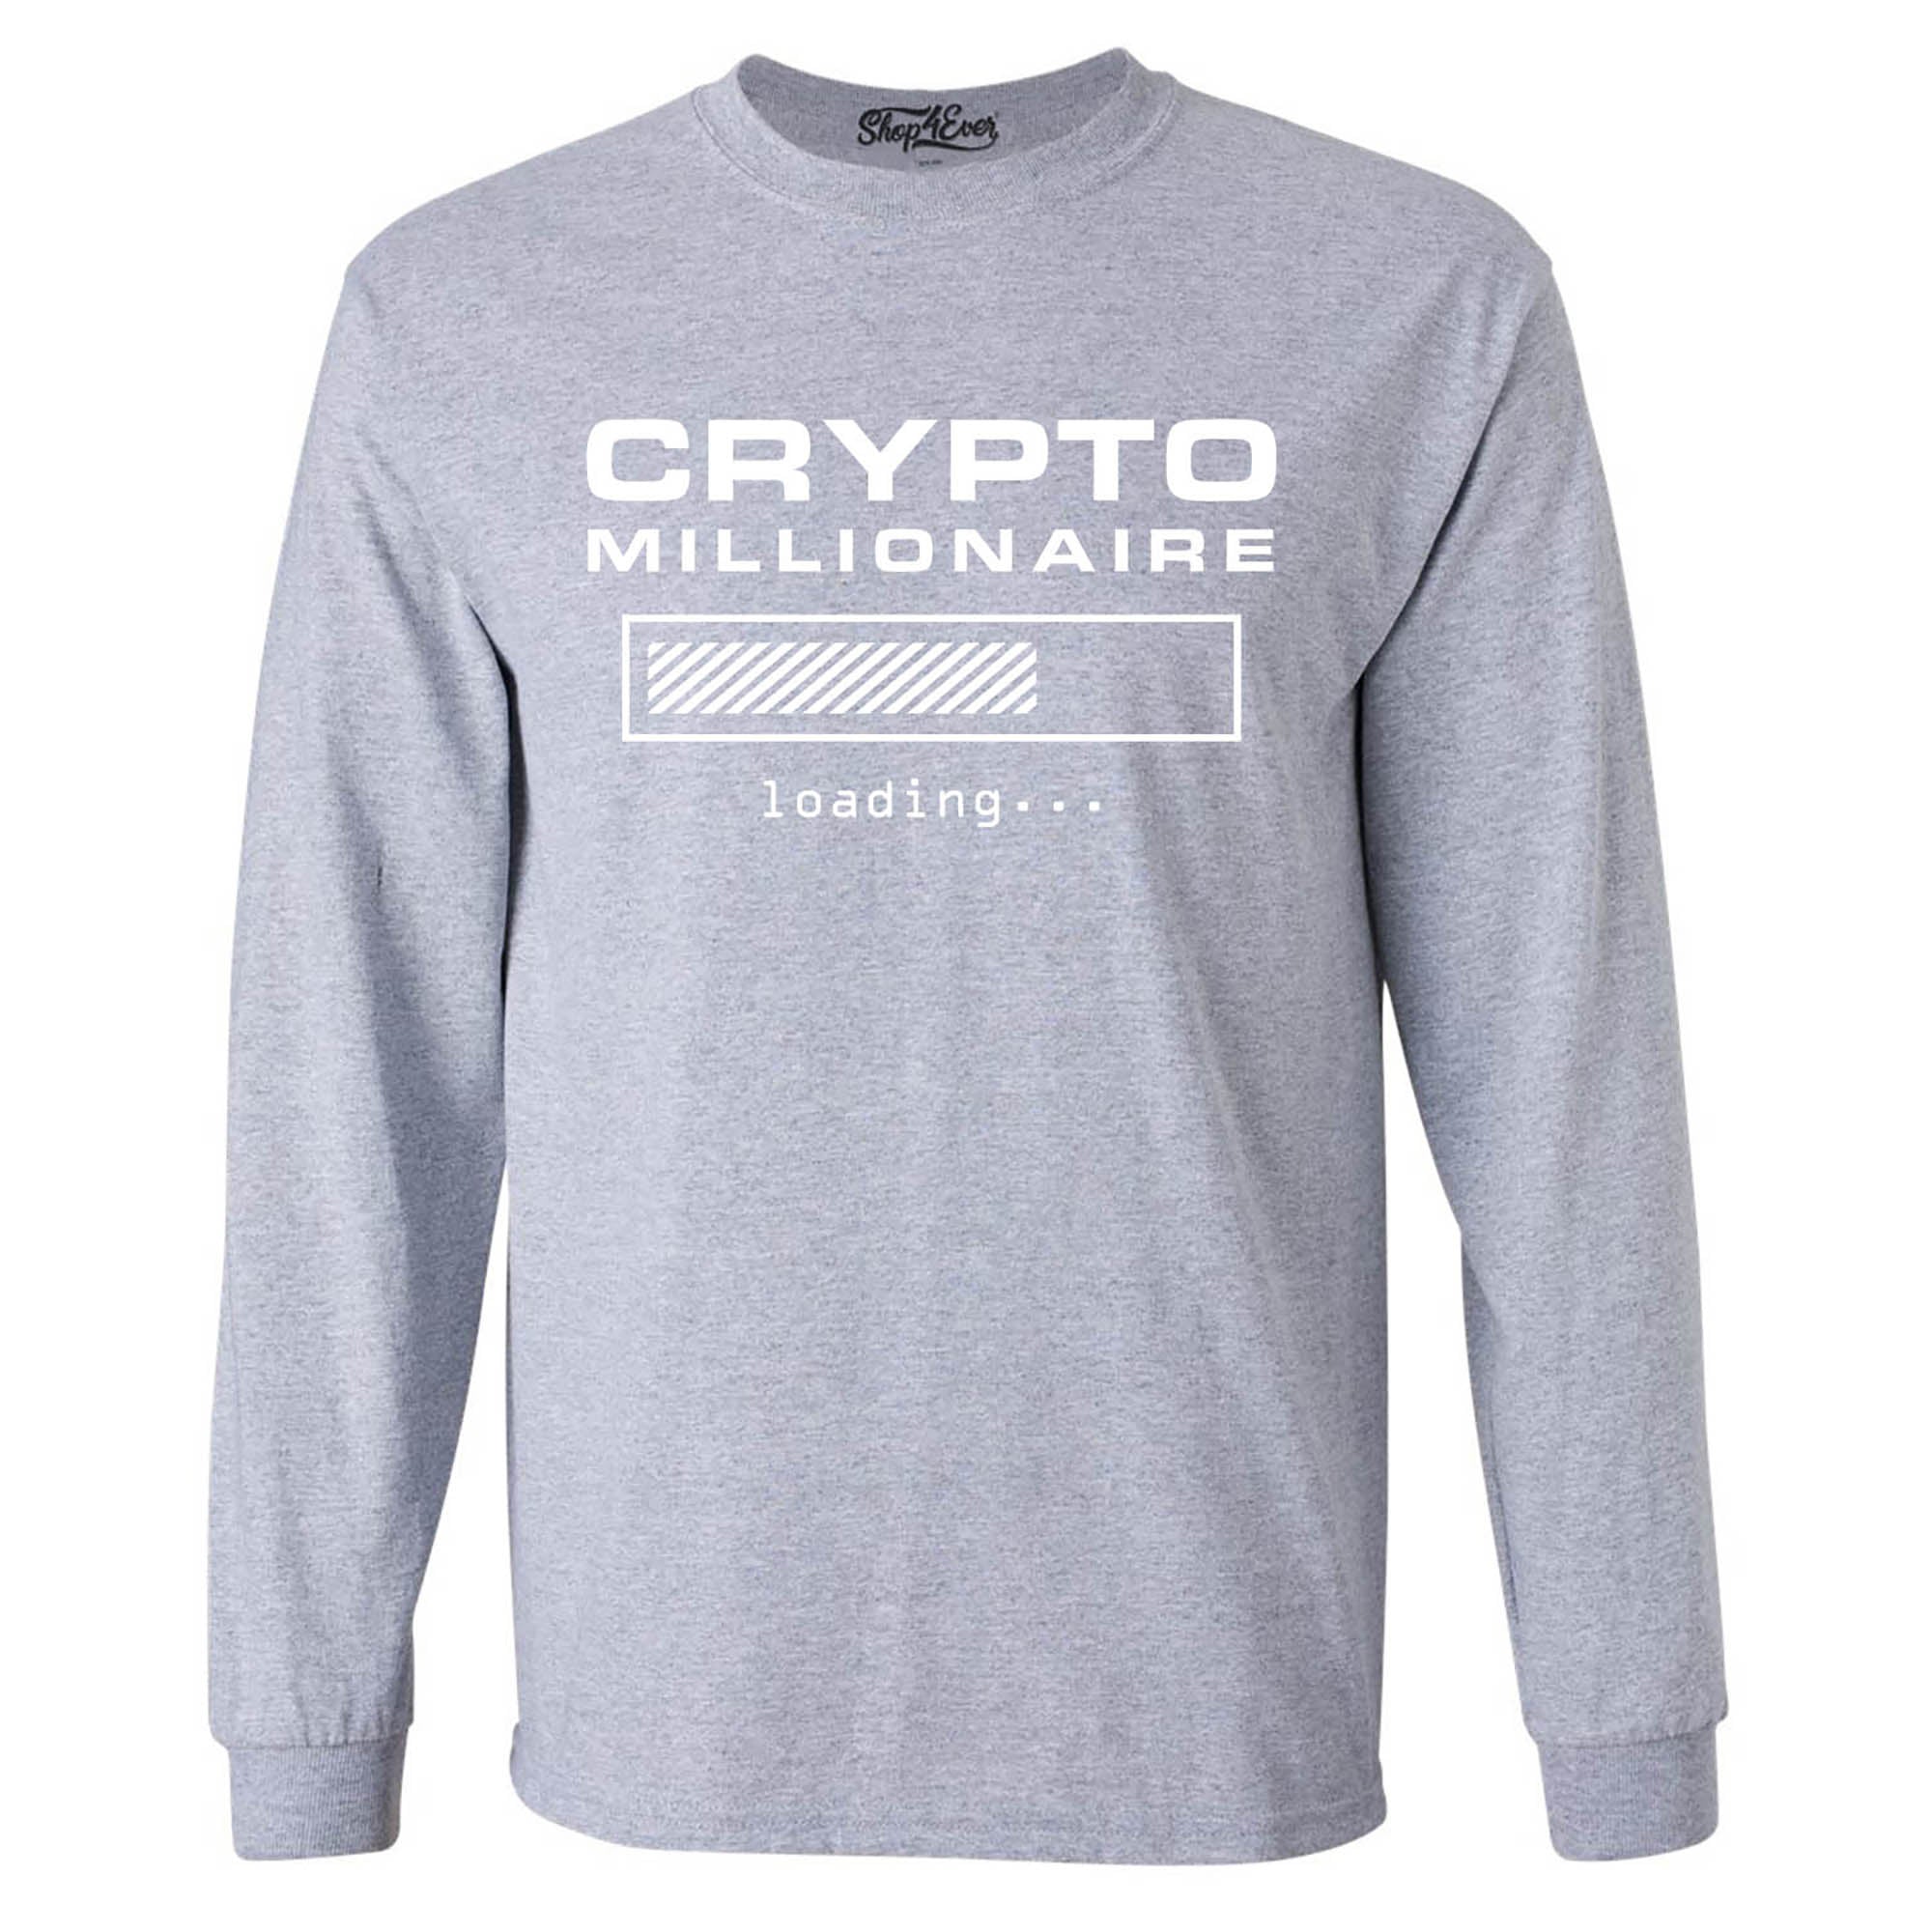 Crypto Millionaire Loading… Long Sleeve Shirt